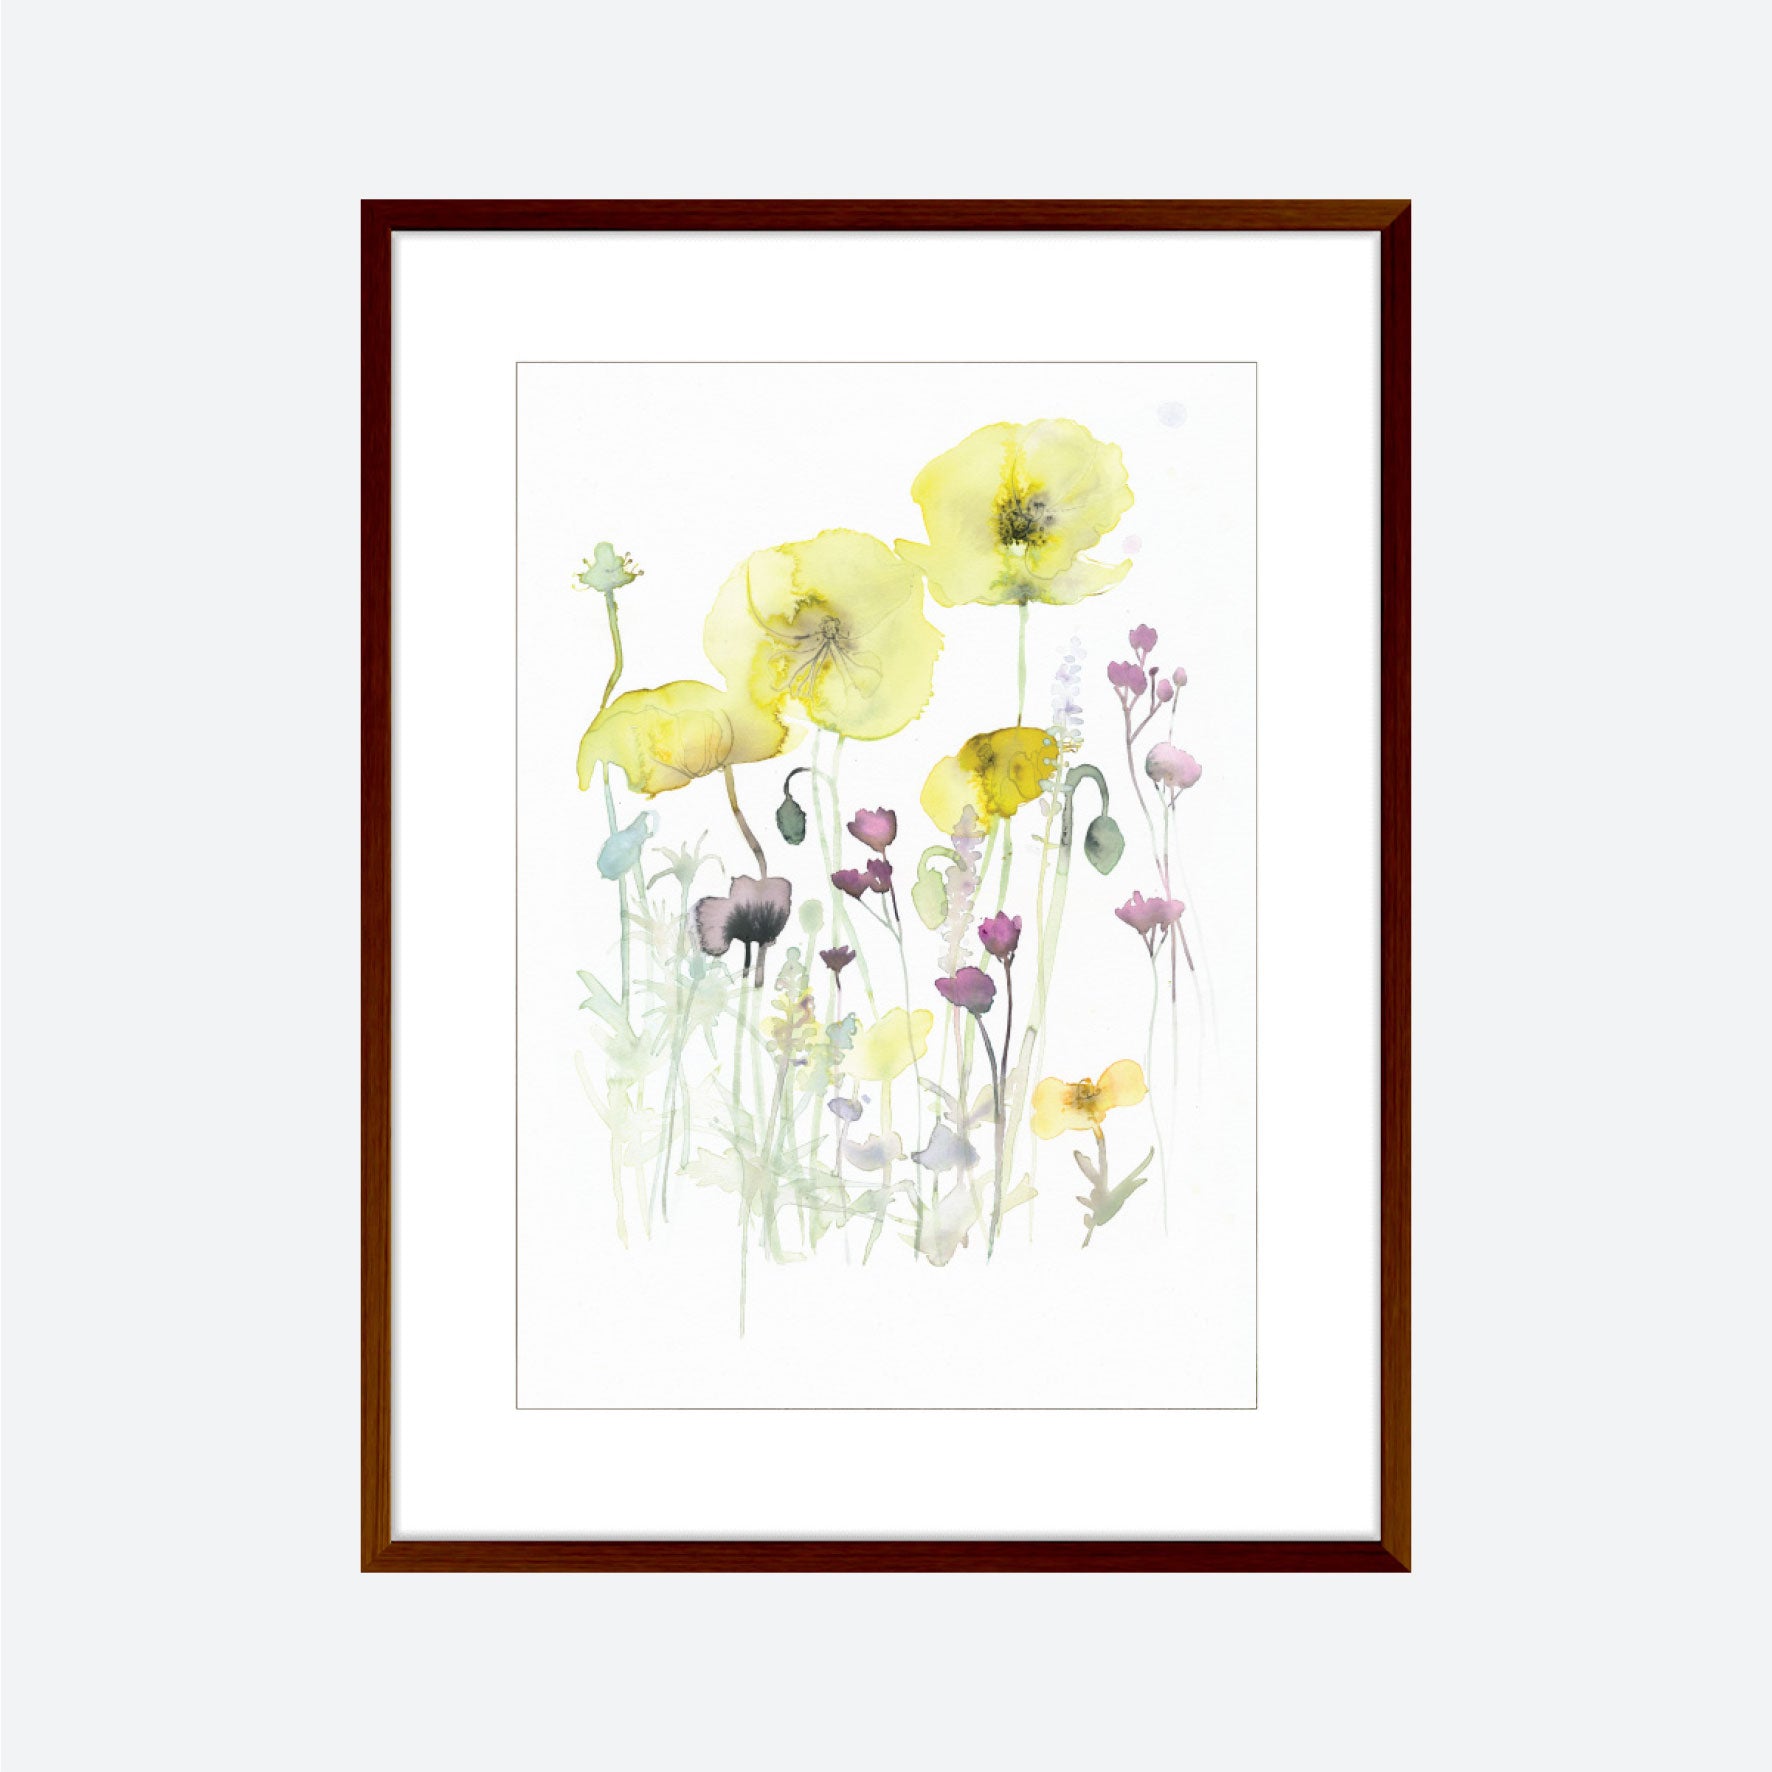 Toril Baekmark - Fine Art Prints - Flower Poster No.9